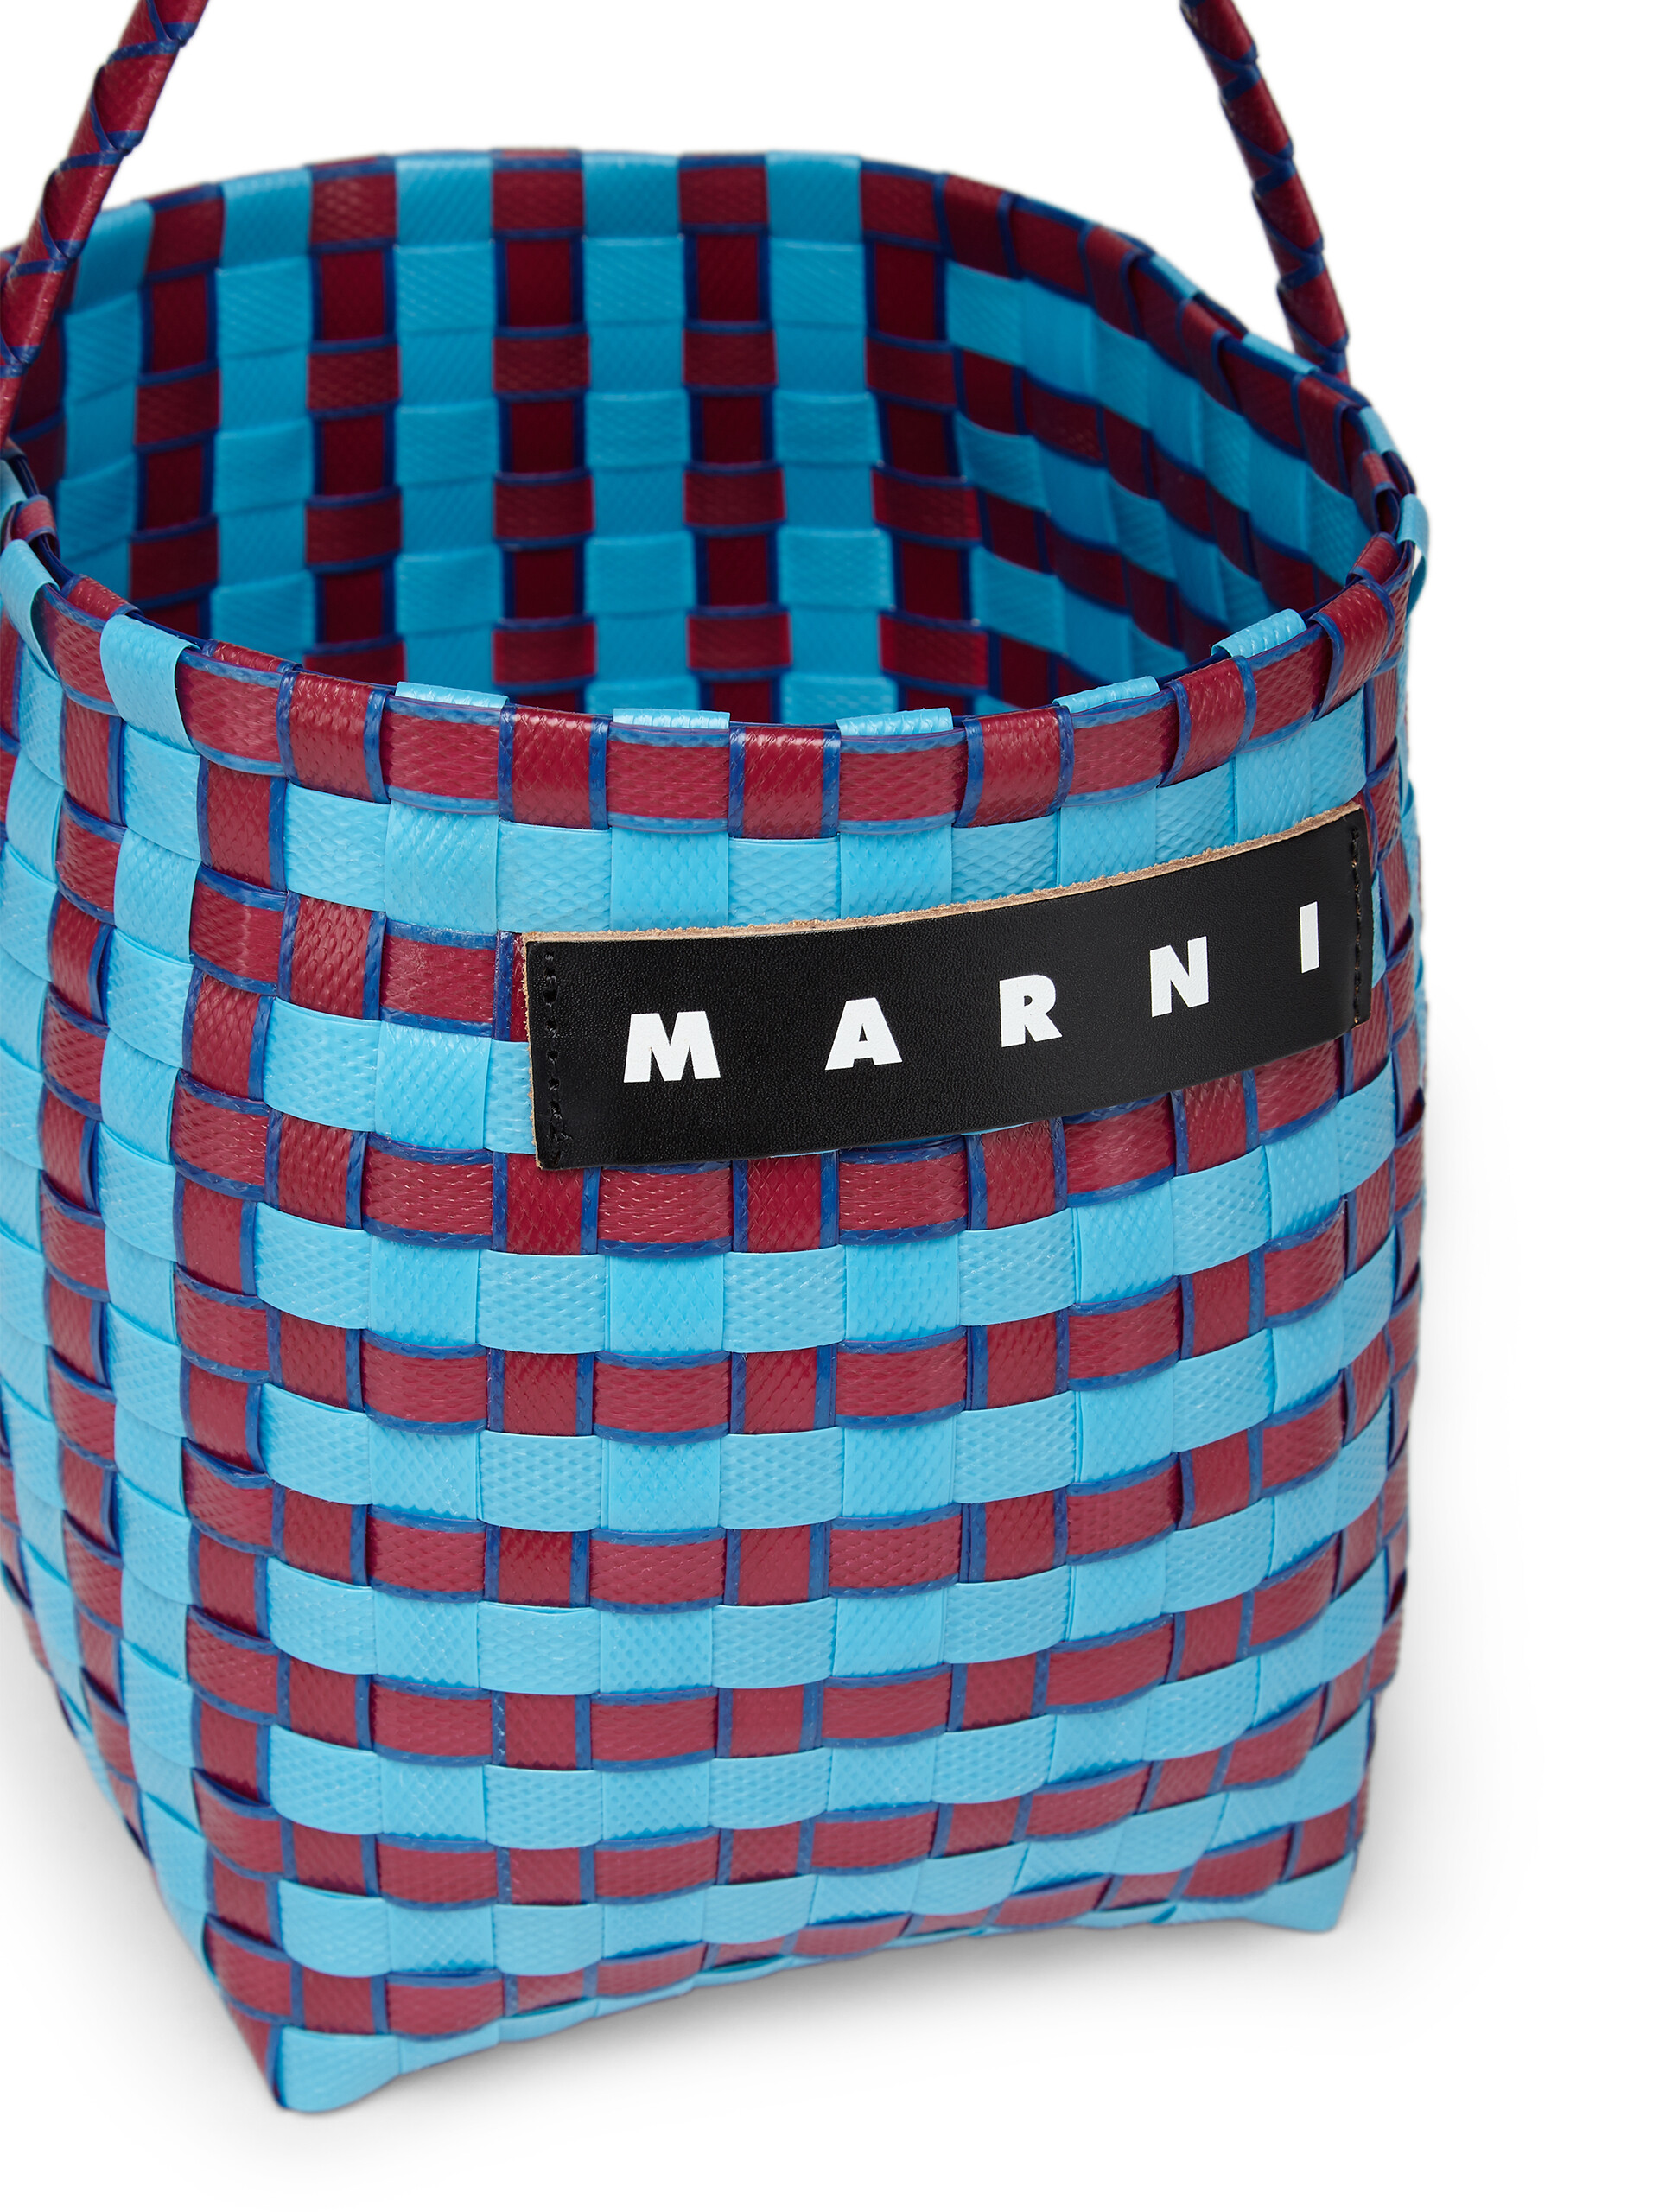 MARNI MARKET POD BASKET bag in orange woven material - Shopping Bags - Image 4